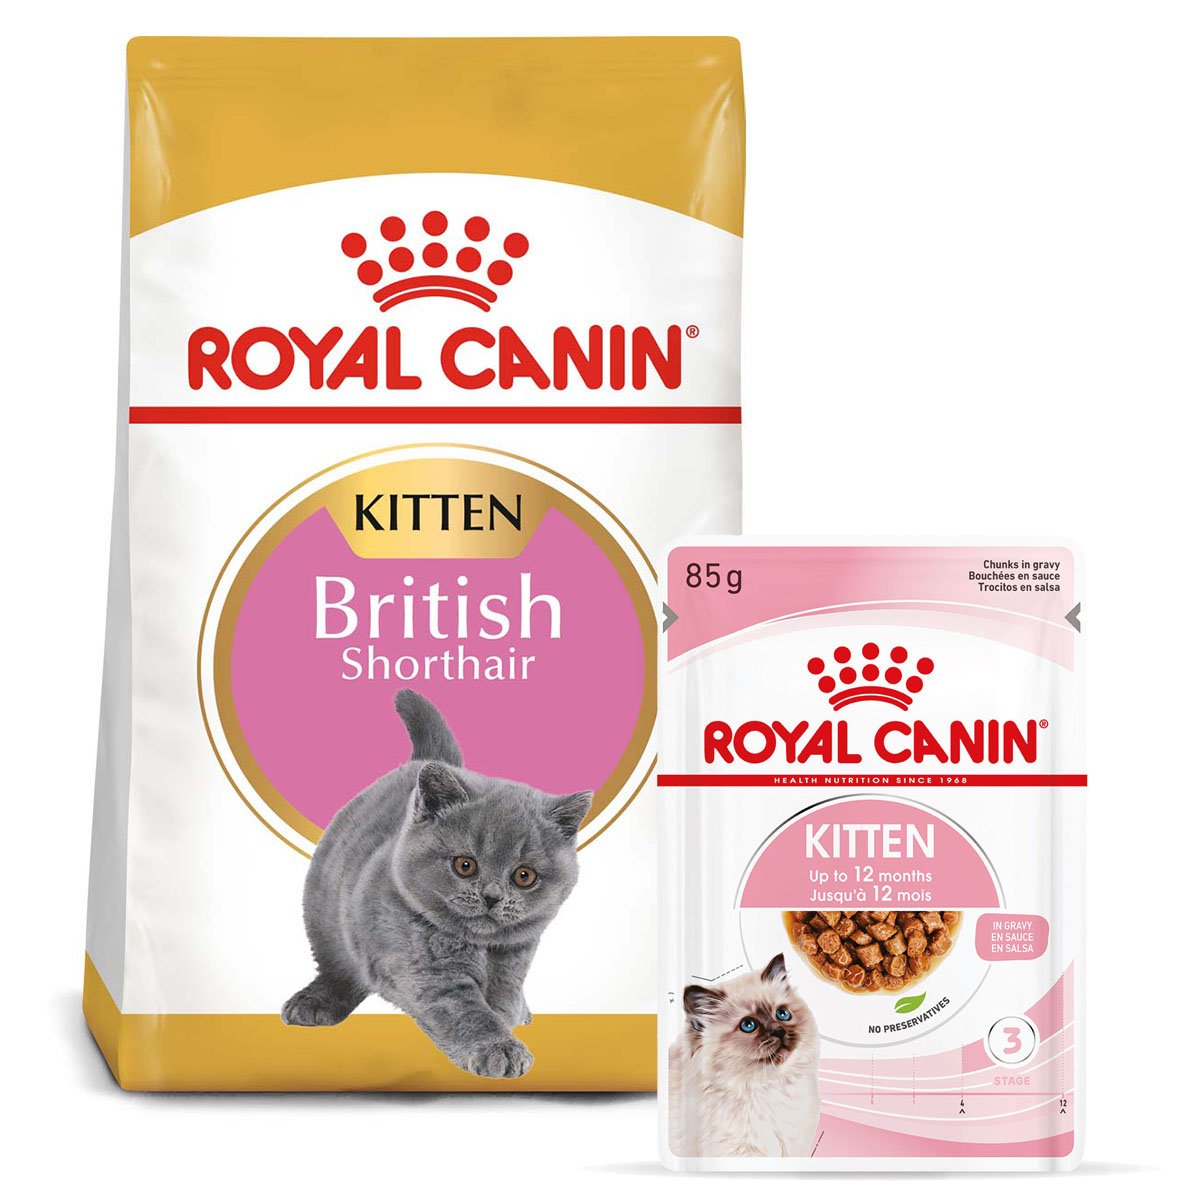 royalcanin bundle trockenundnassfutter kitten british 1ugHzOoiidBEng